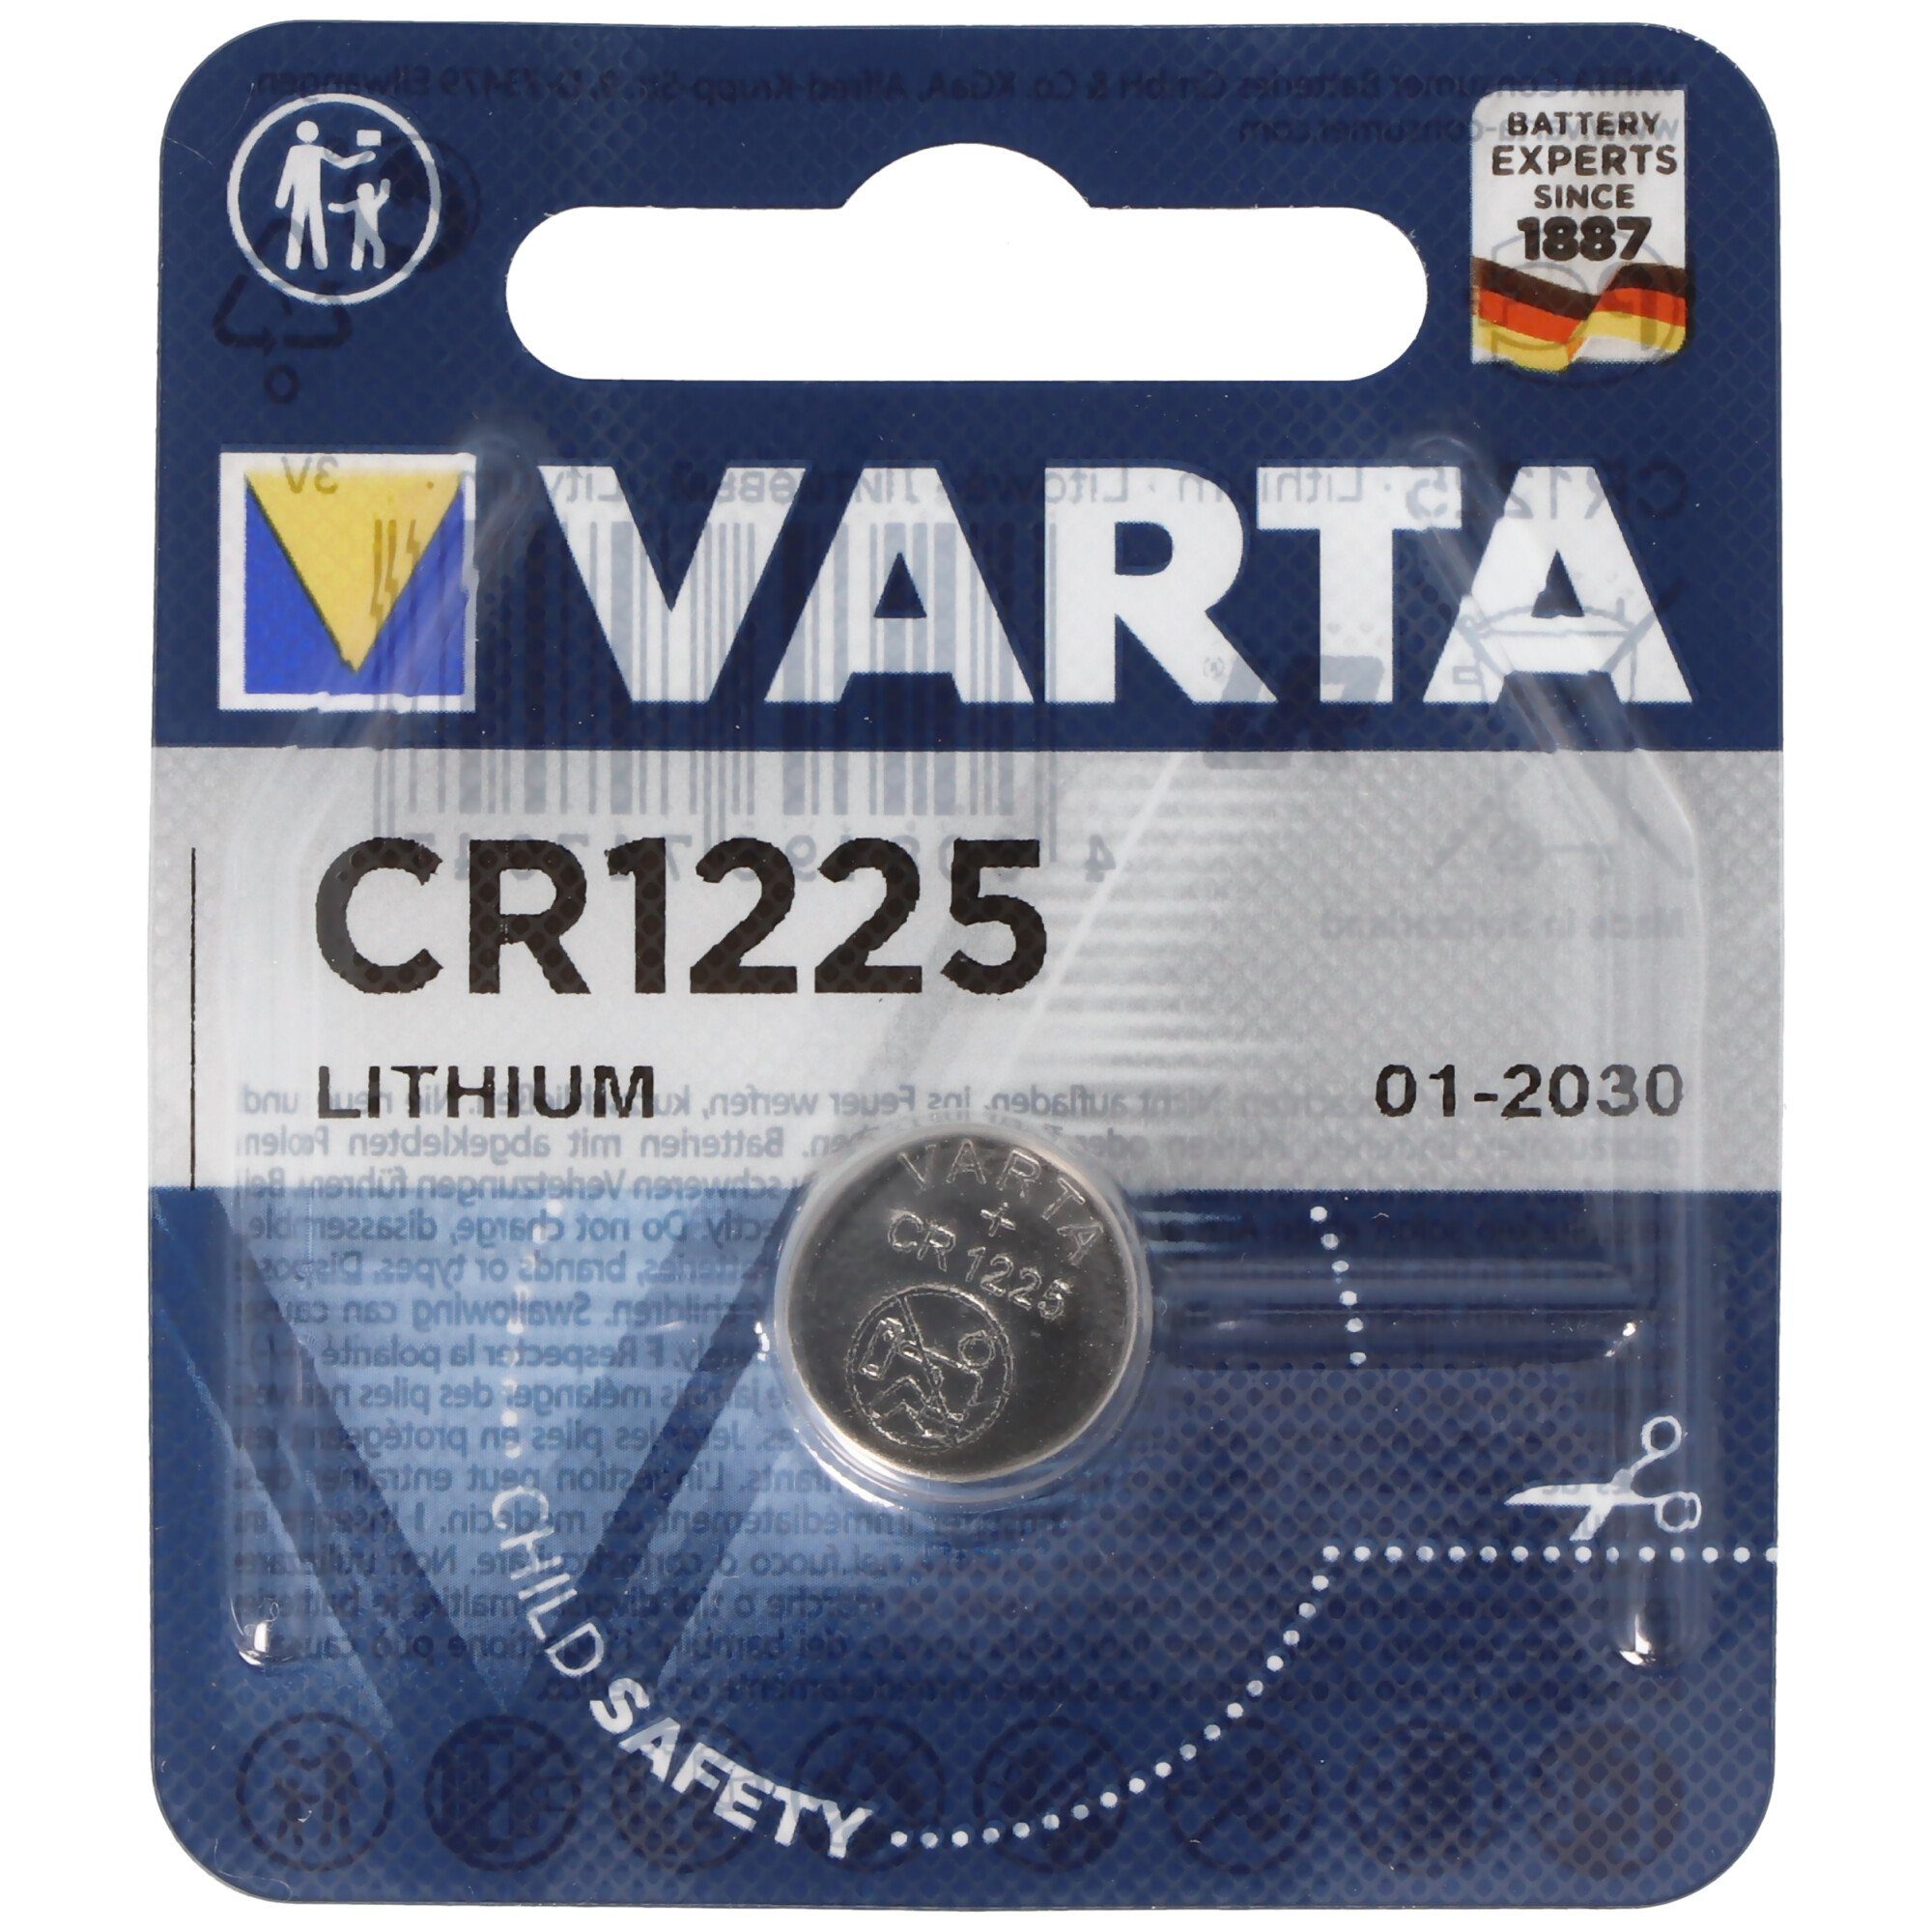 VARTA Varta CR1225 Professional Electronics Batterie 06225101401 IEC CR 122 Batterie, (3,0 V)